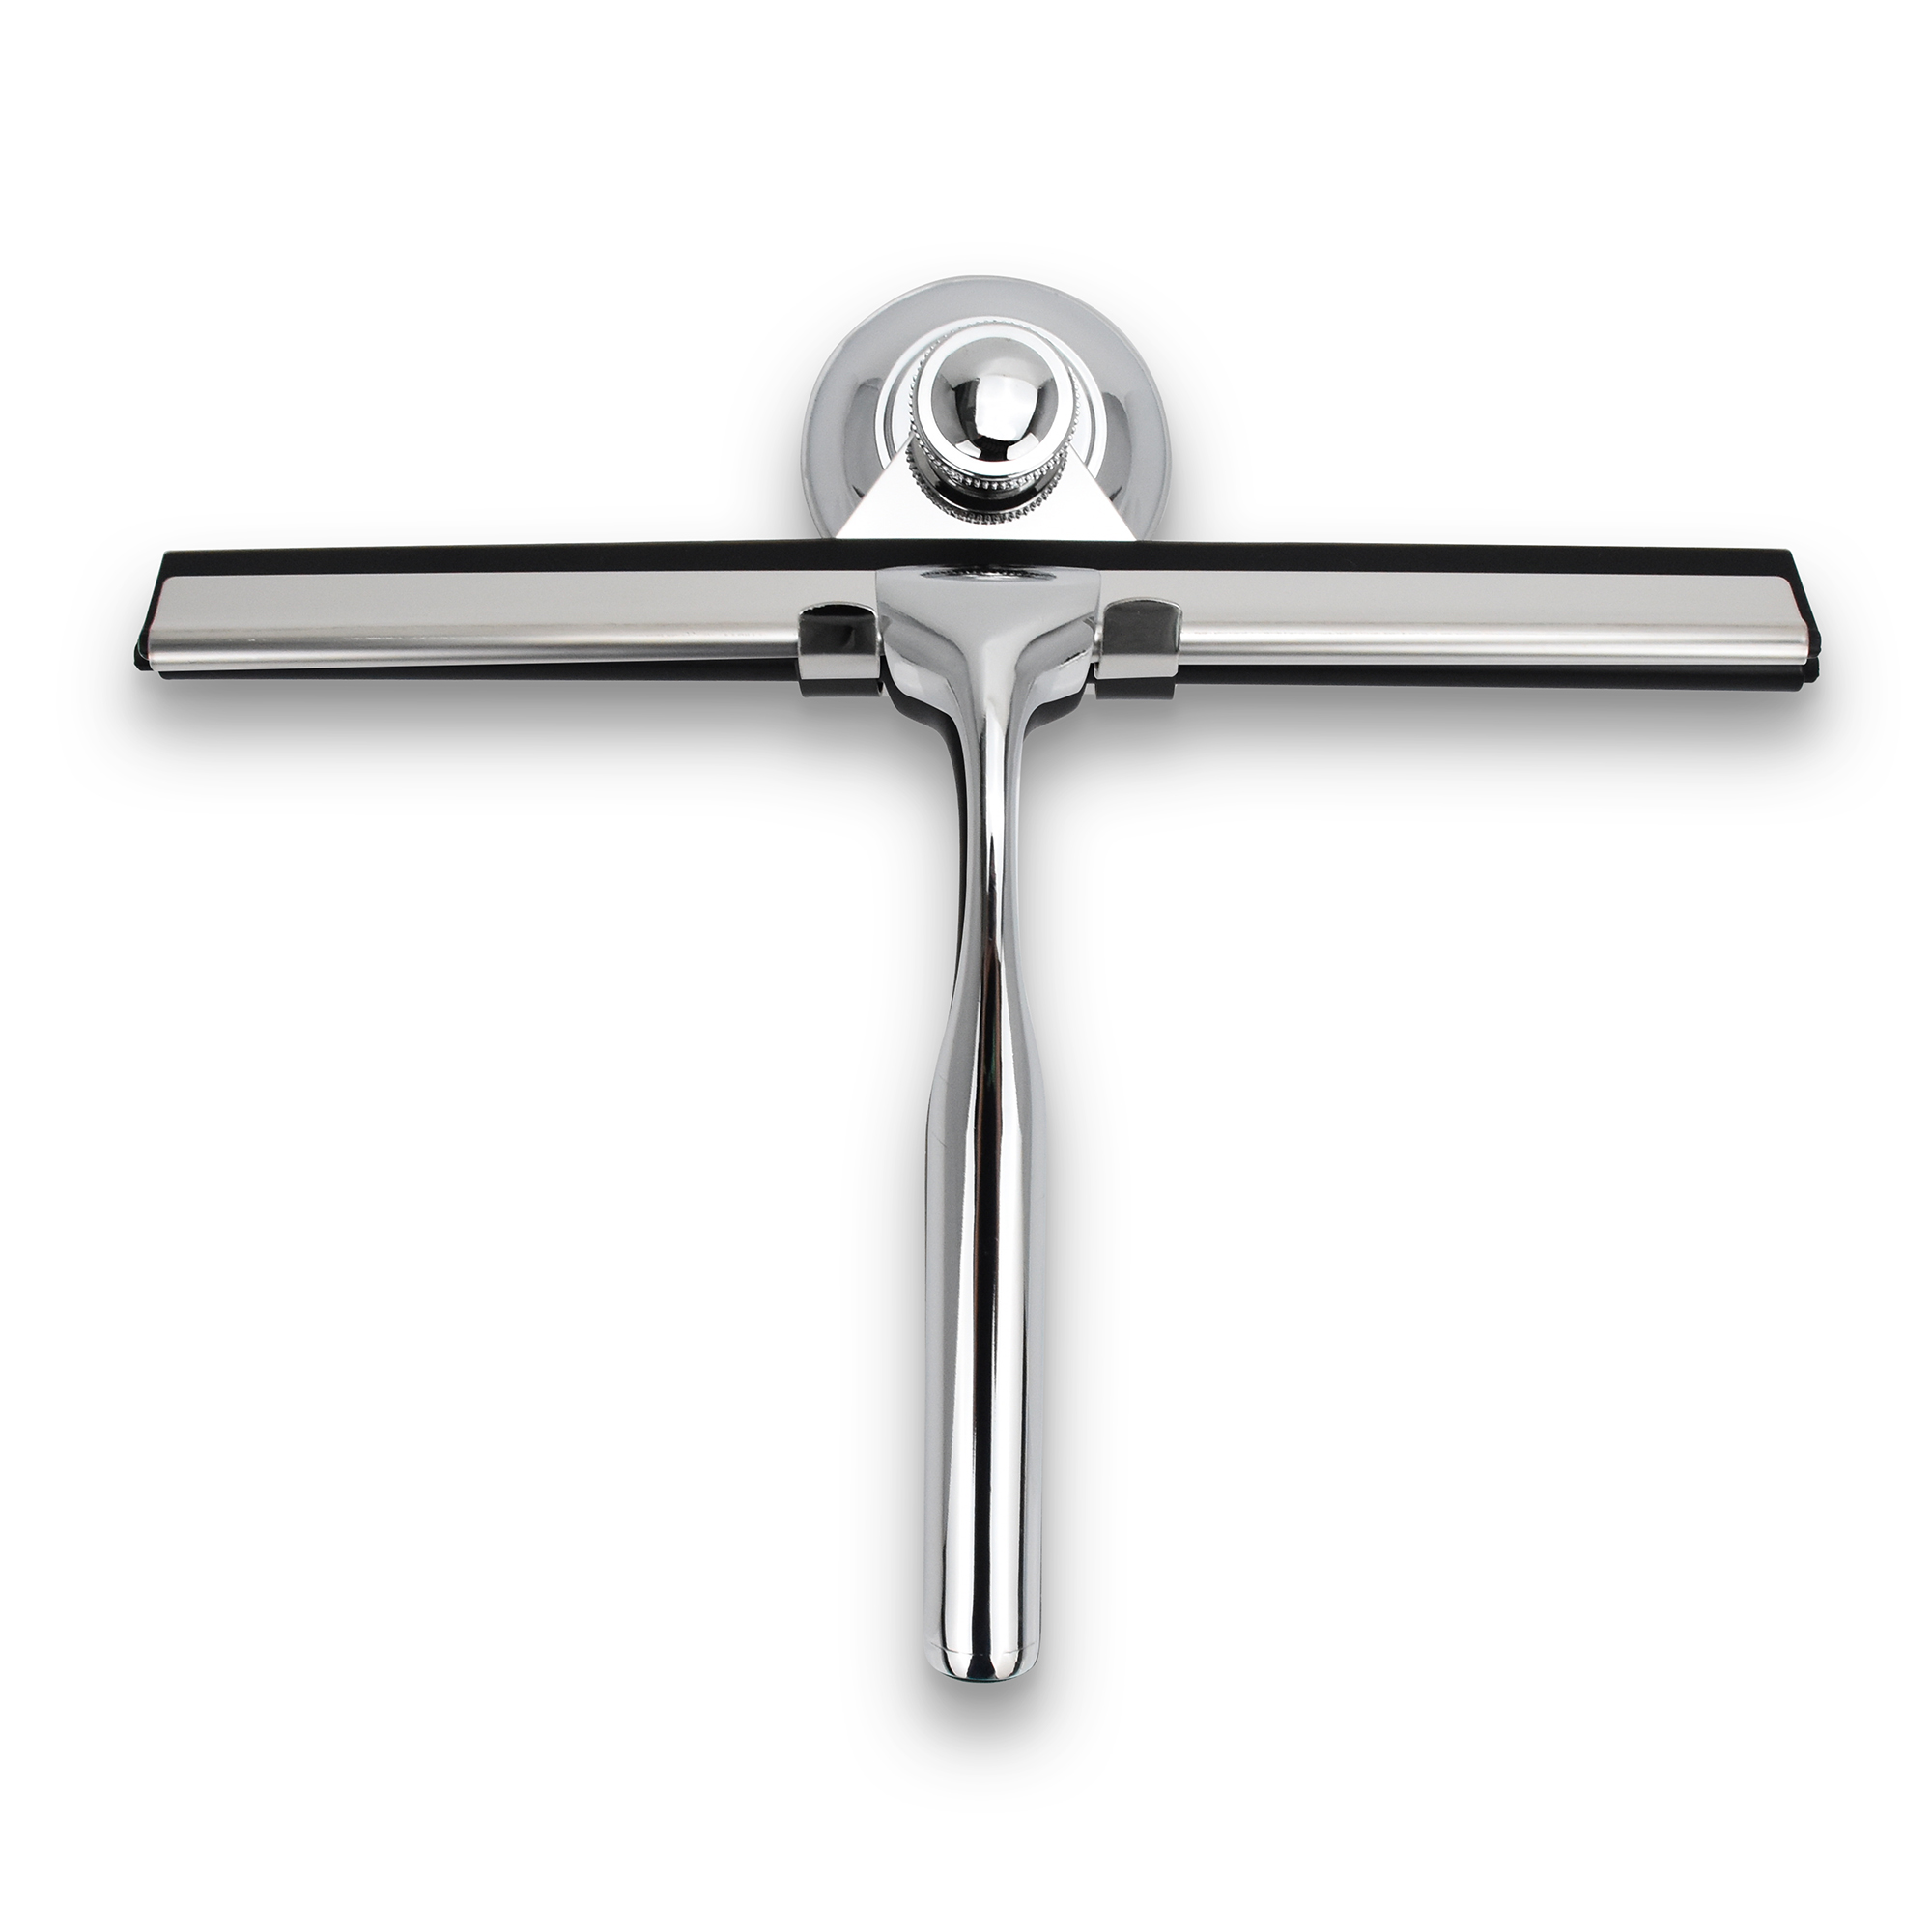 10” Shower Squeegee — Squeegee for Shower Glass Door，Premium